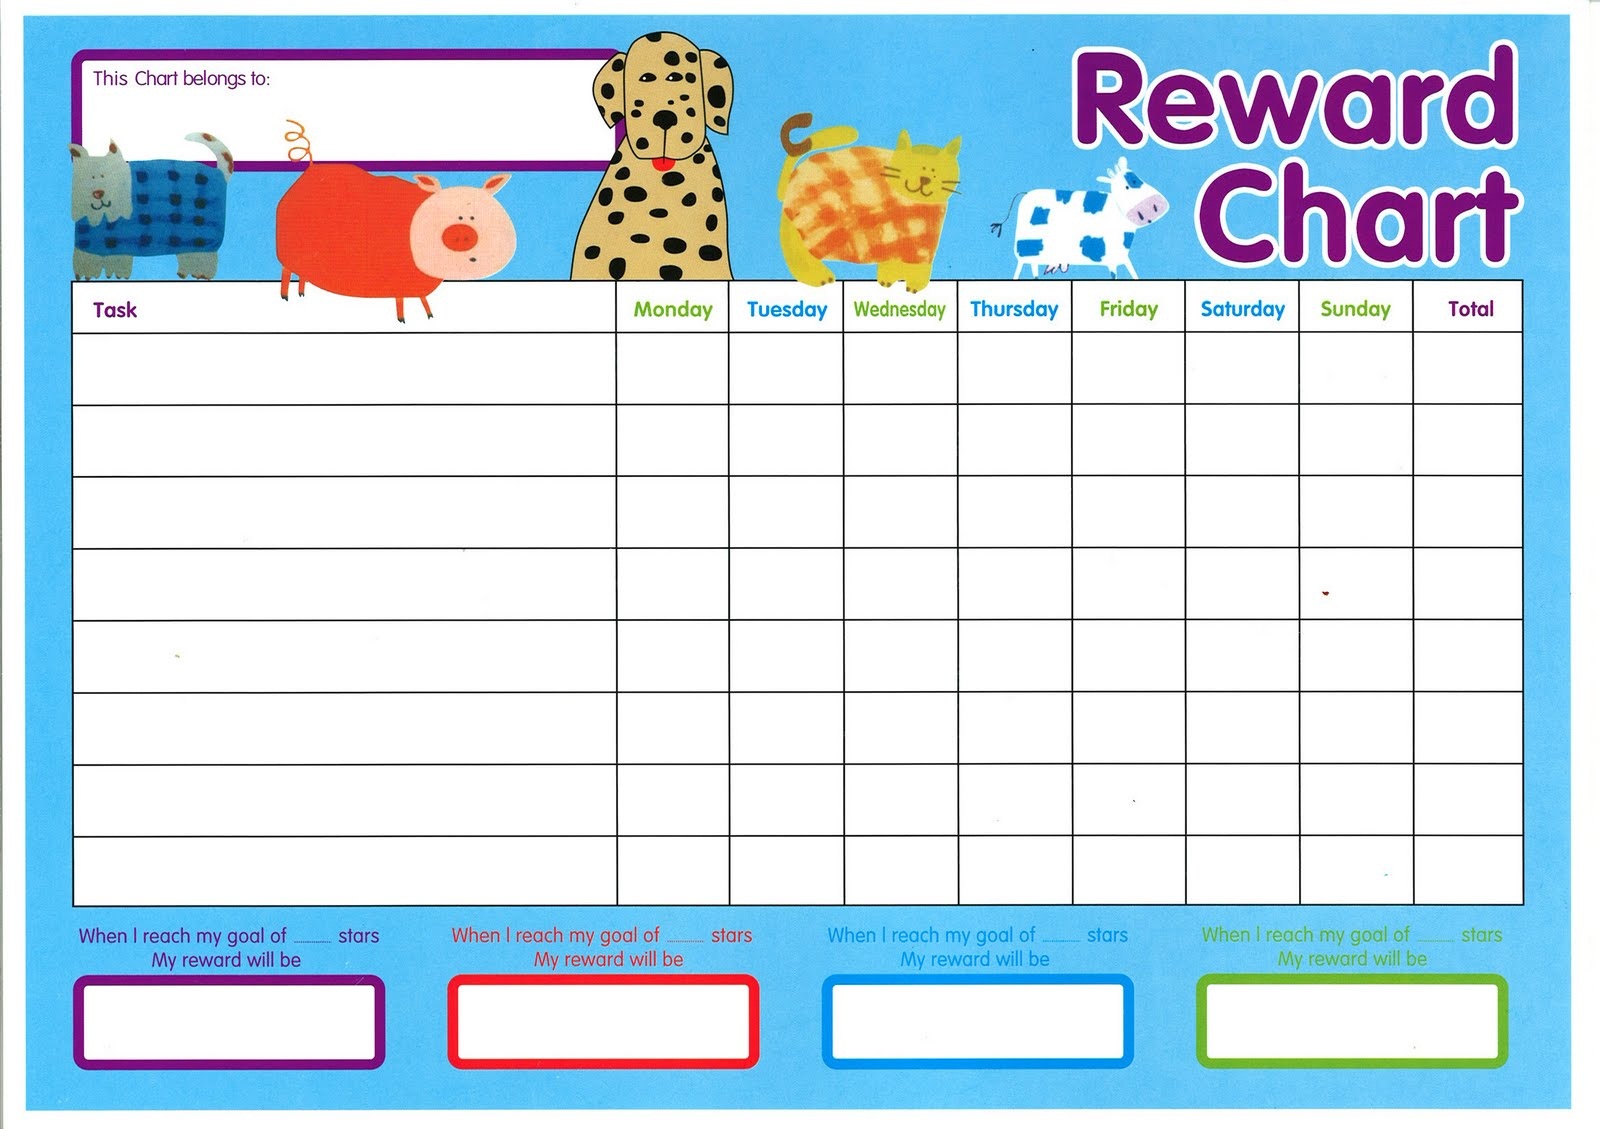 Free Reward Chart Printable - Printable World Holiday